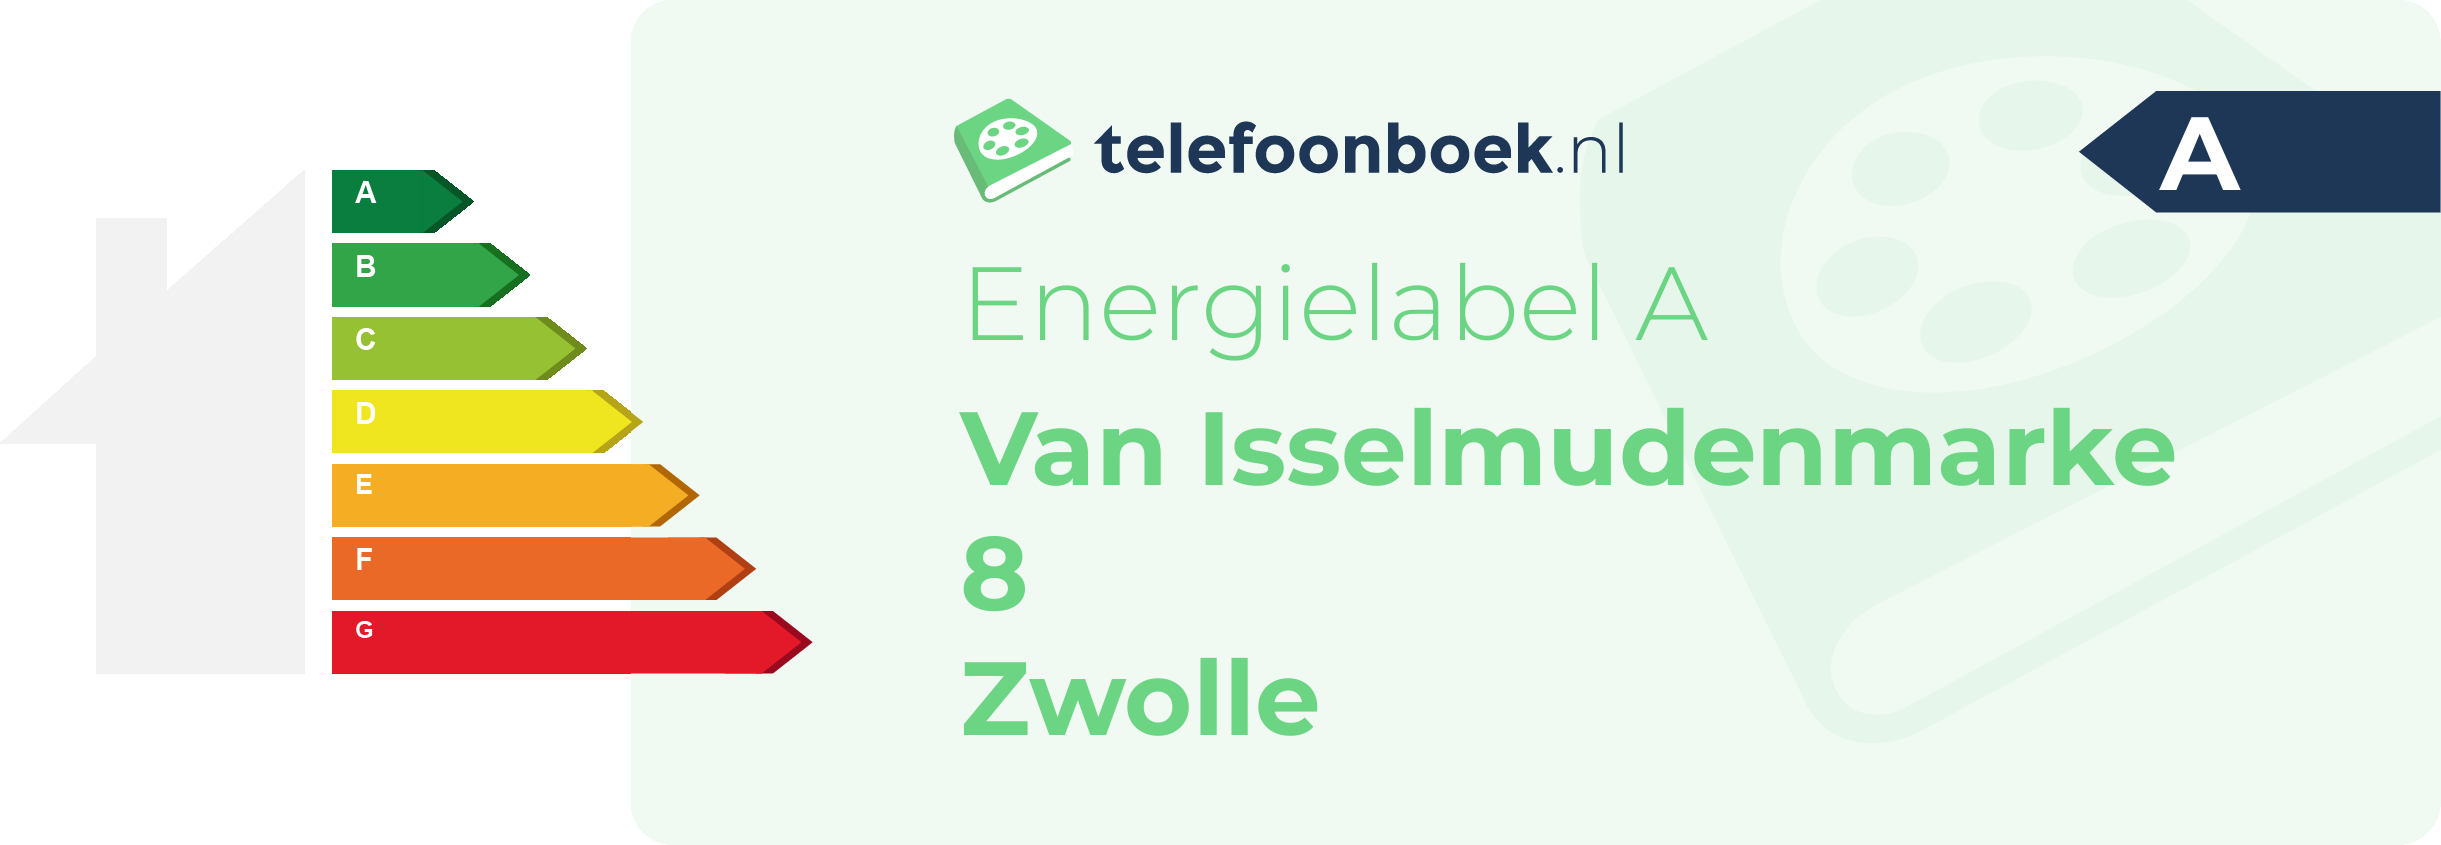 Energielabel Van Isselmudenmarke 8 Zwolle